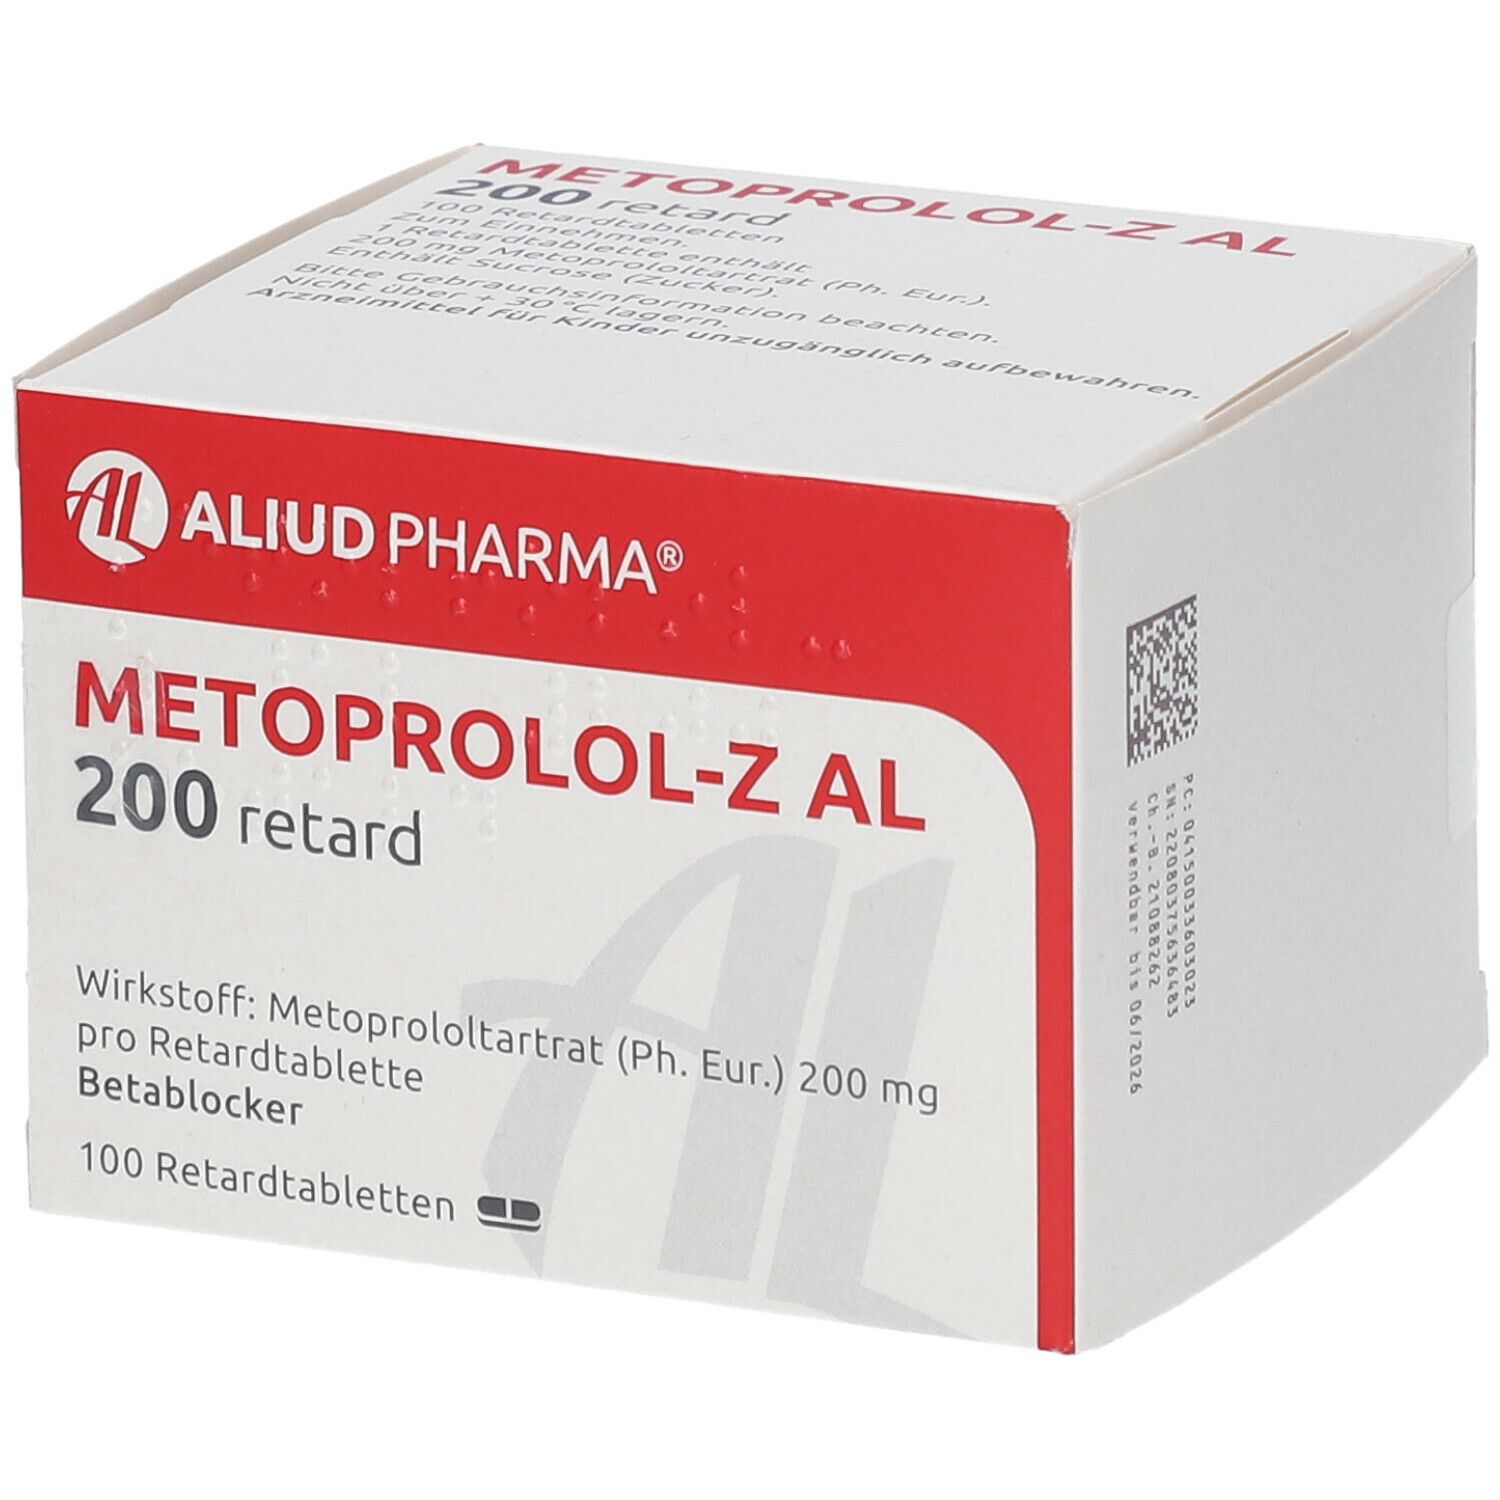 Metoprolol Z AL 200 retard